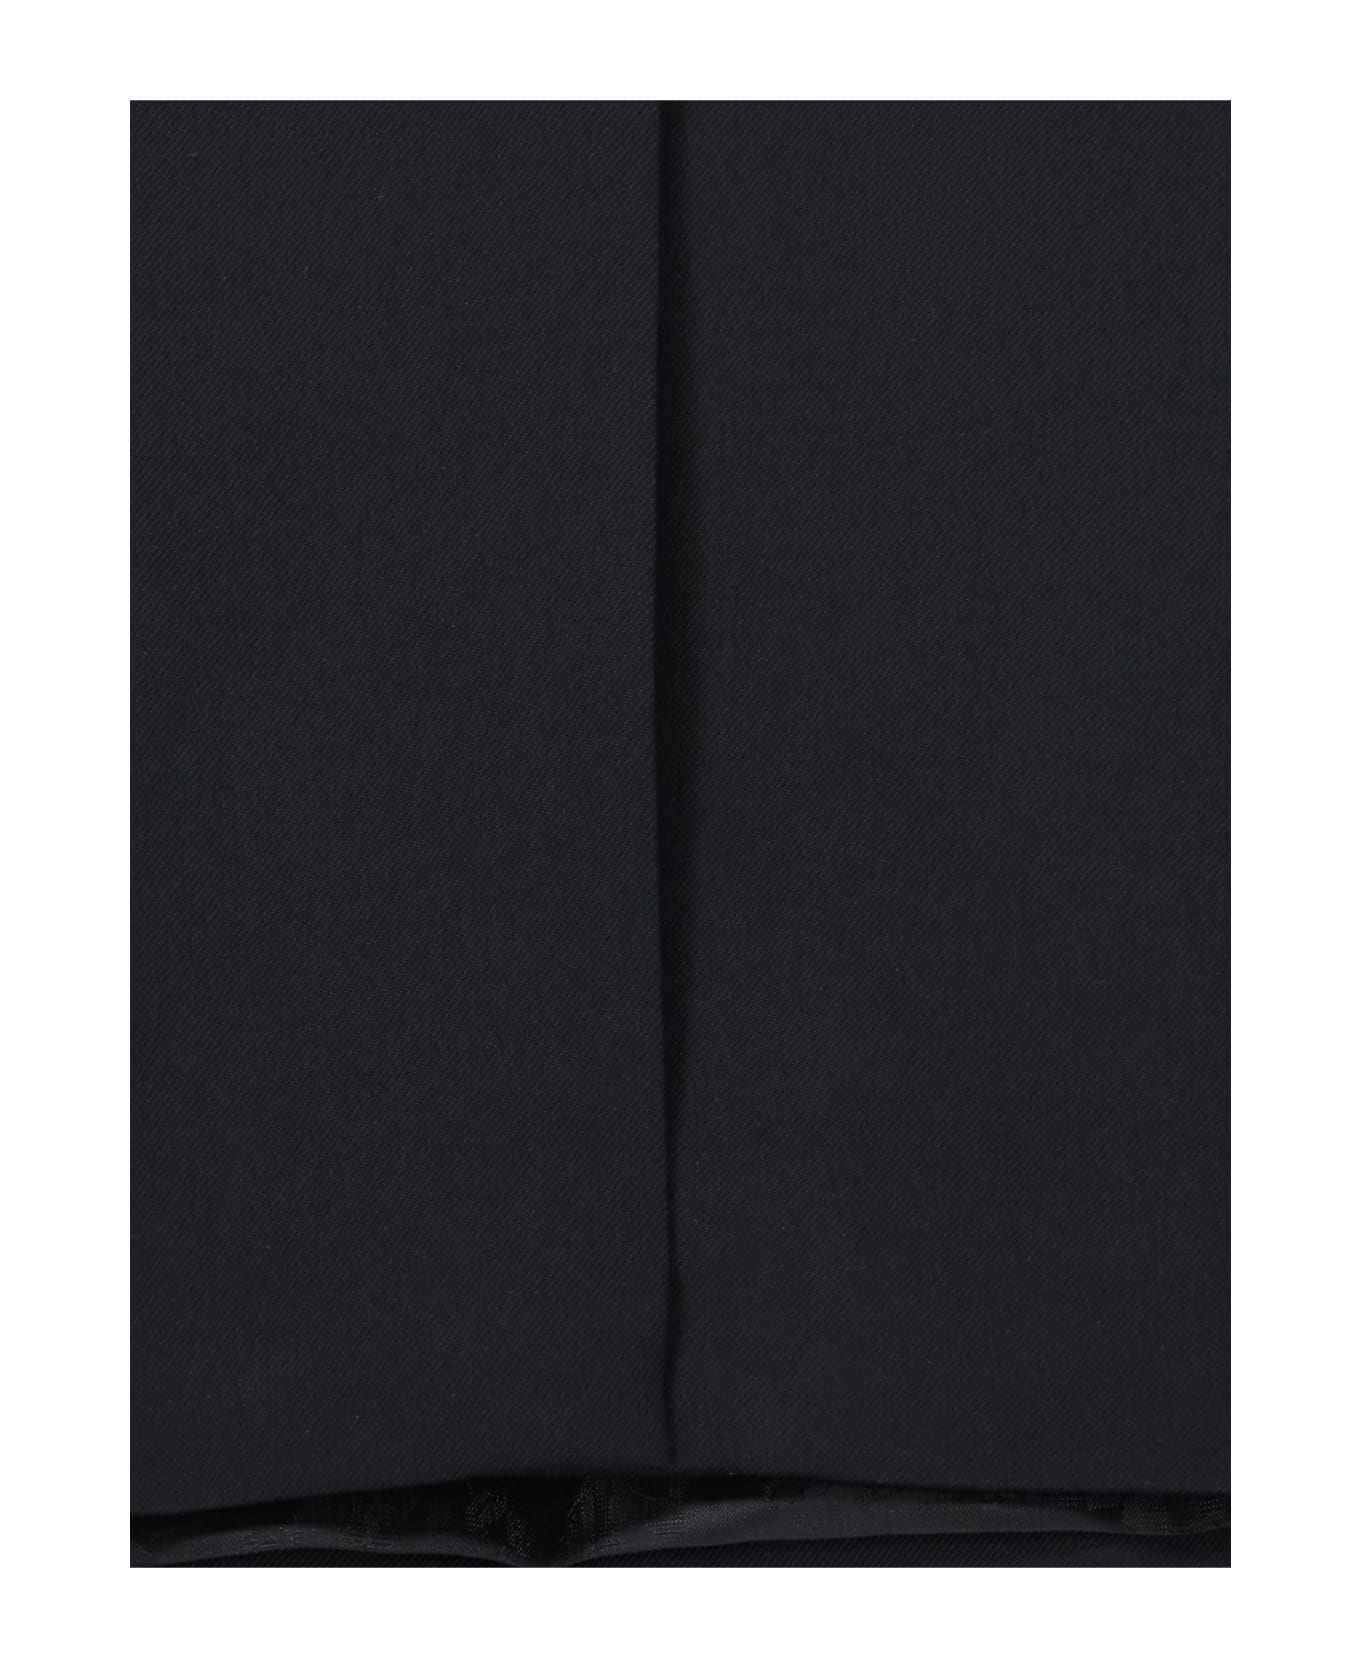 Versace Midi Skirt - Black スカート